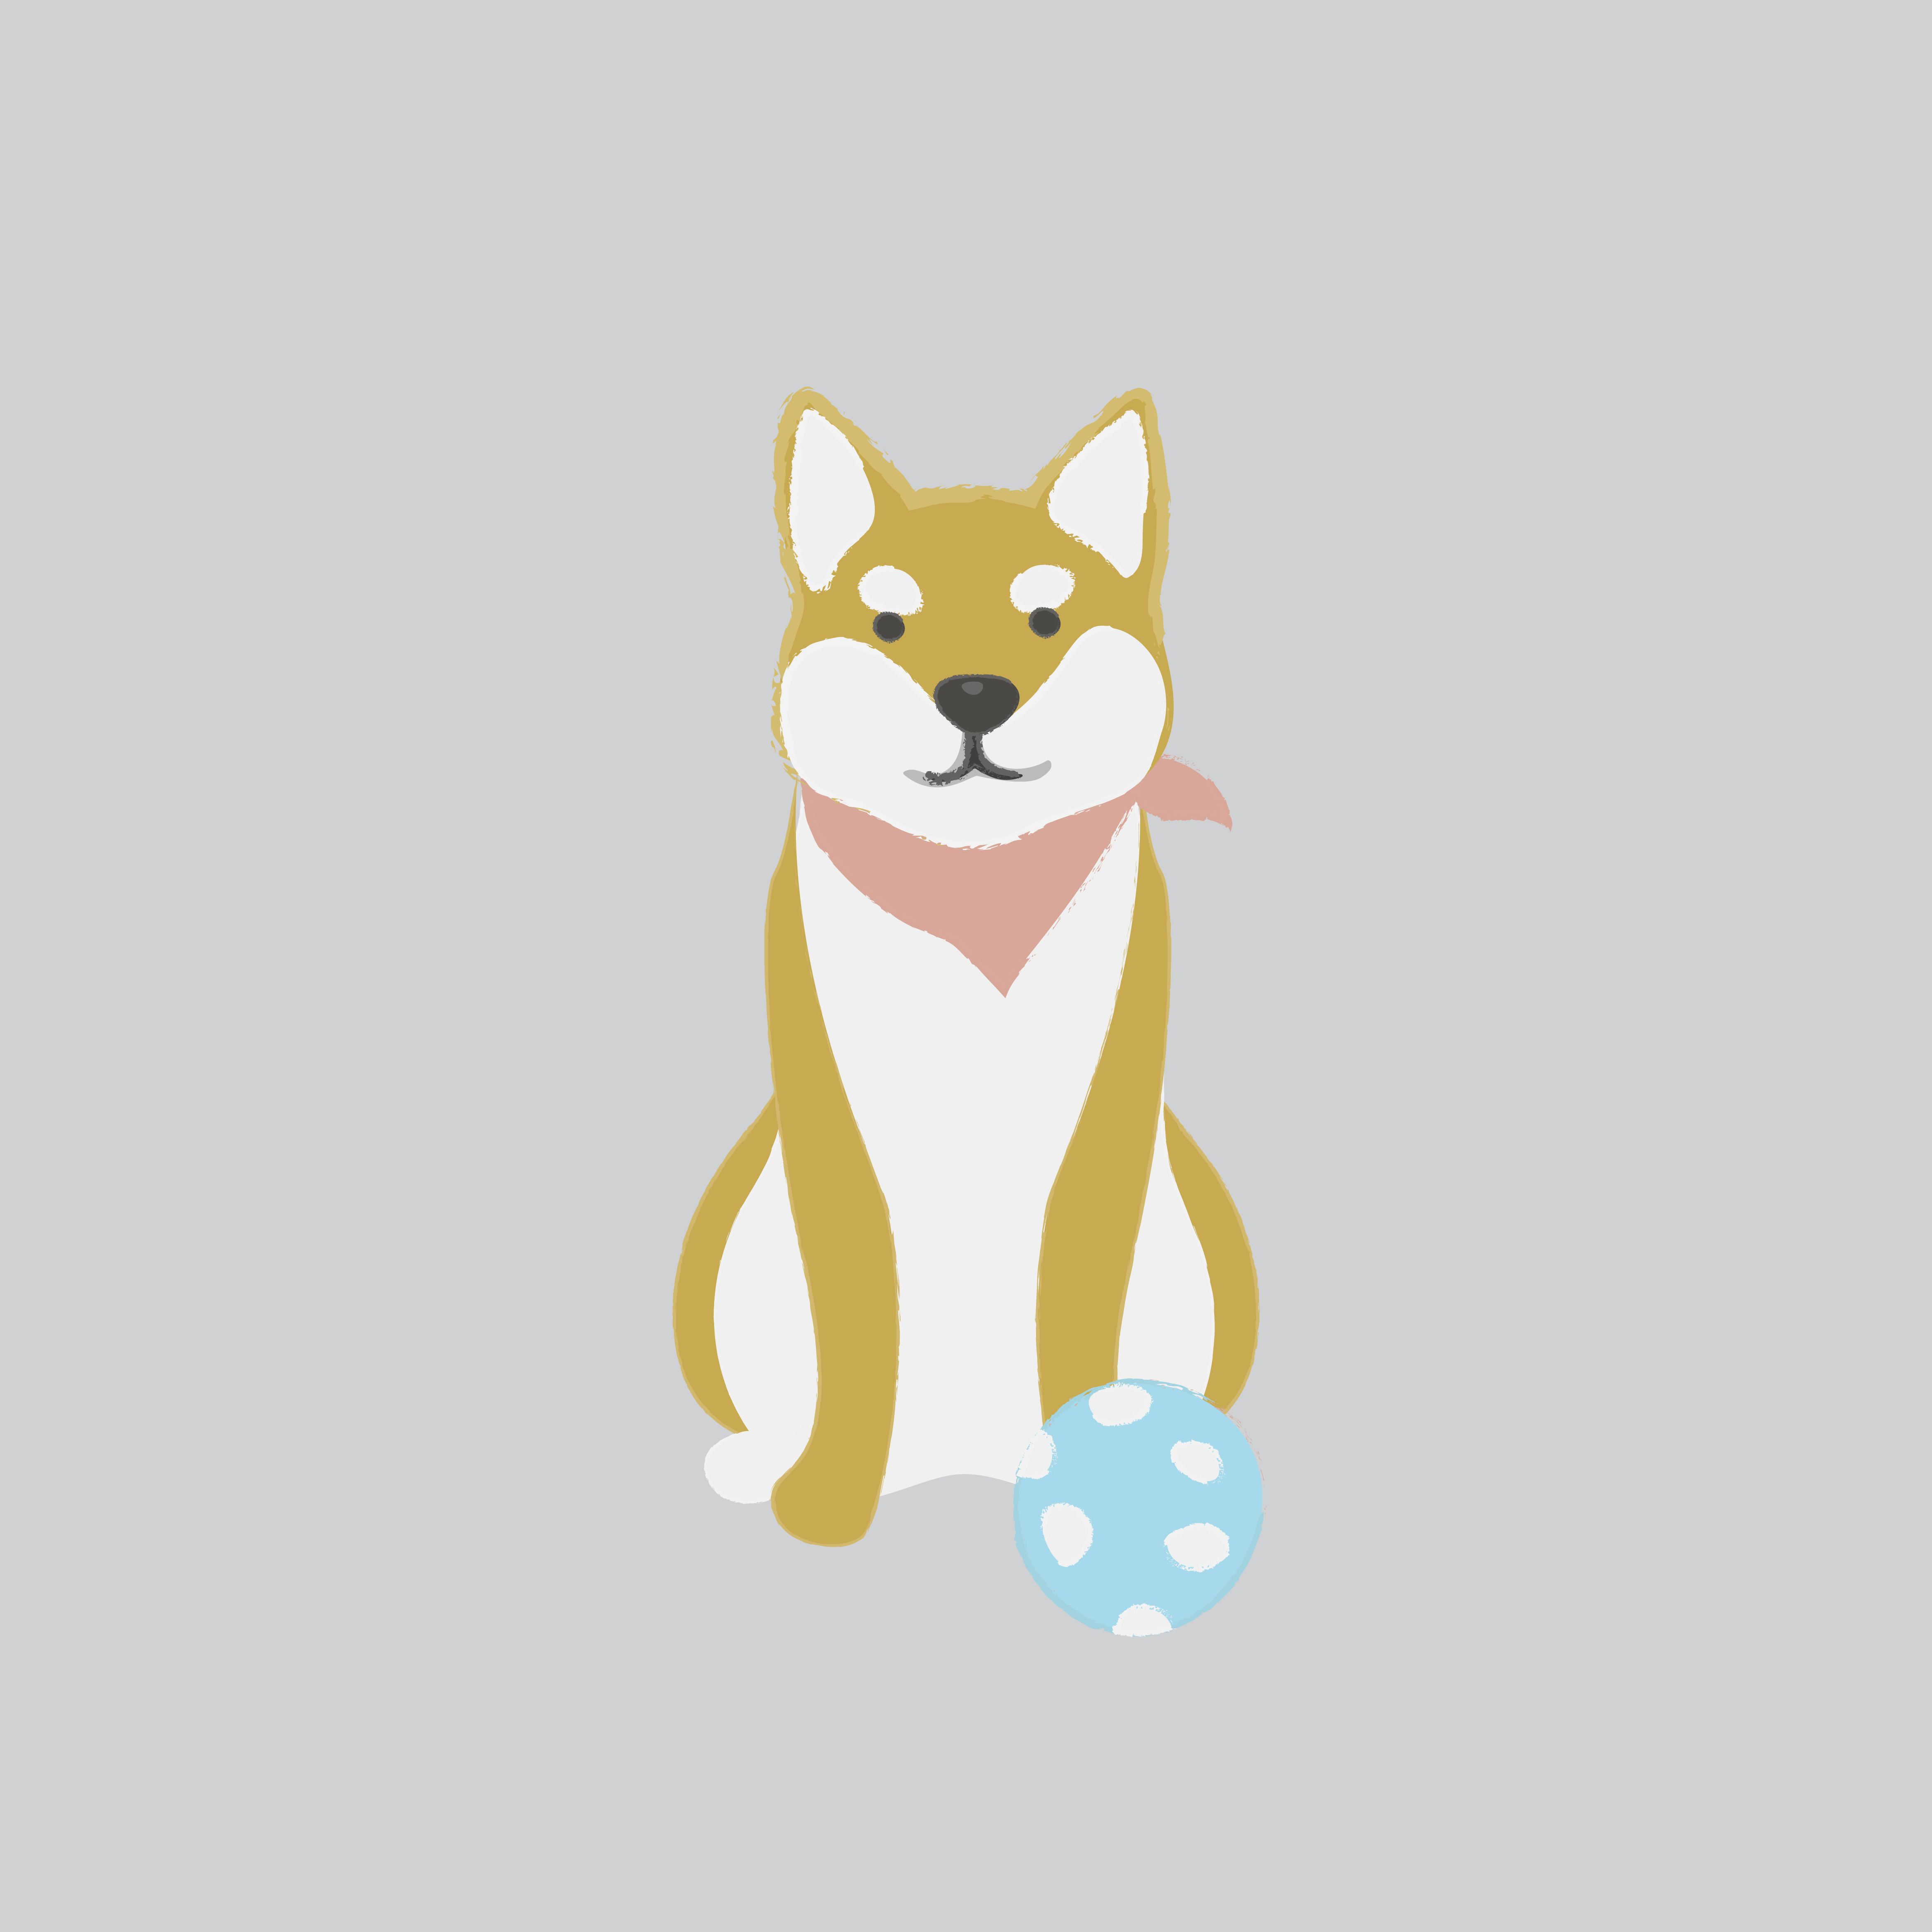 Cute illustration of a shiba inu dog Download Free